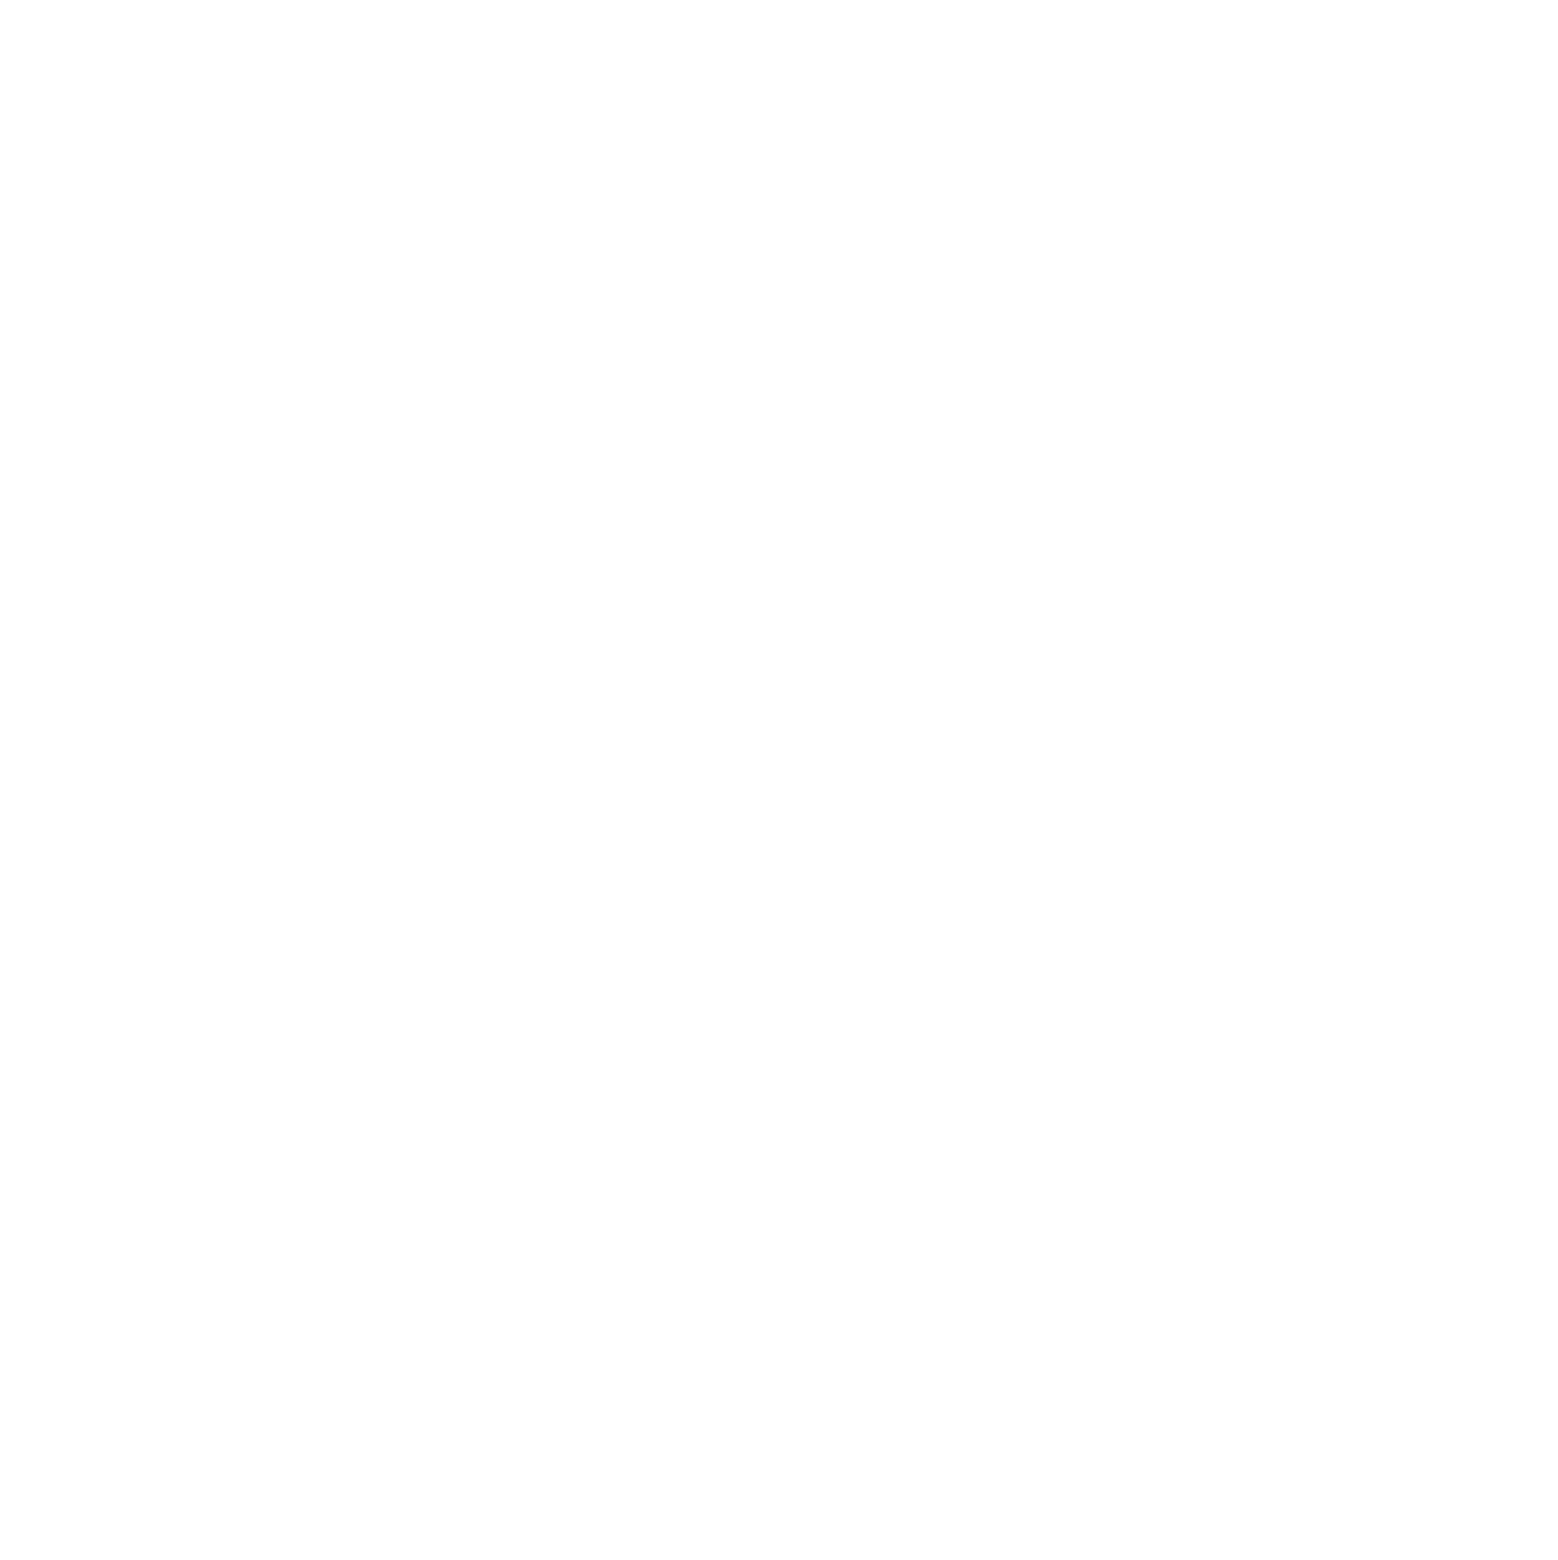 Dalata Hotel Group logo pour fonds sombres (PNG transparent)